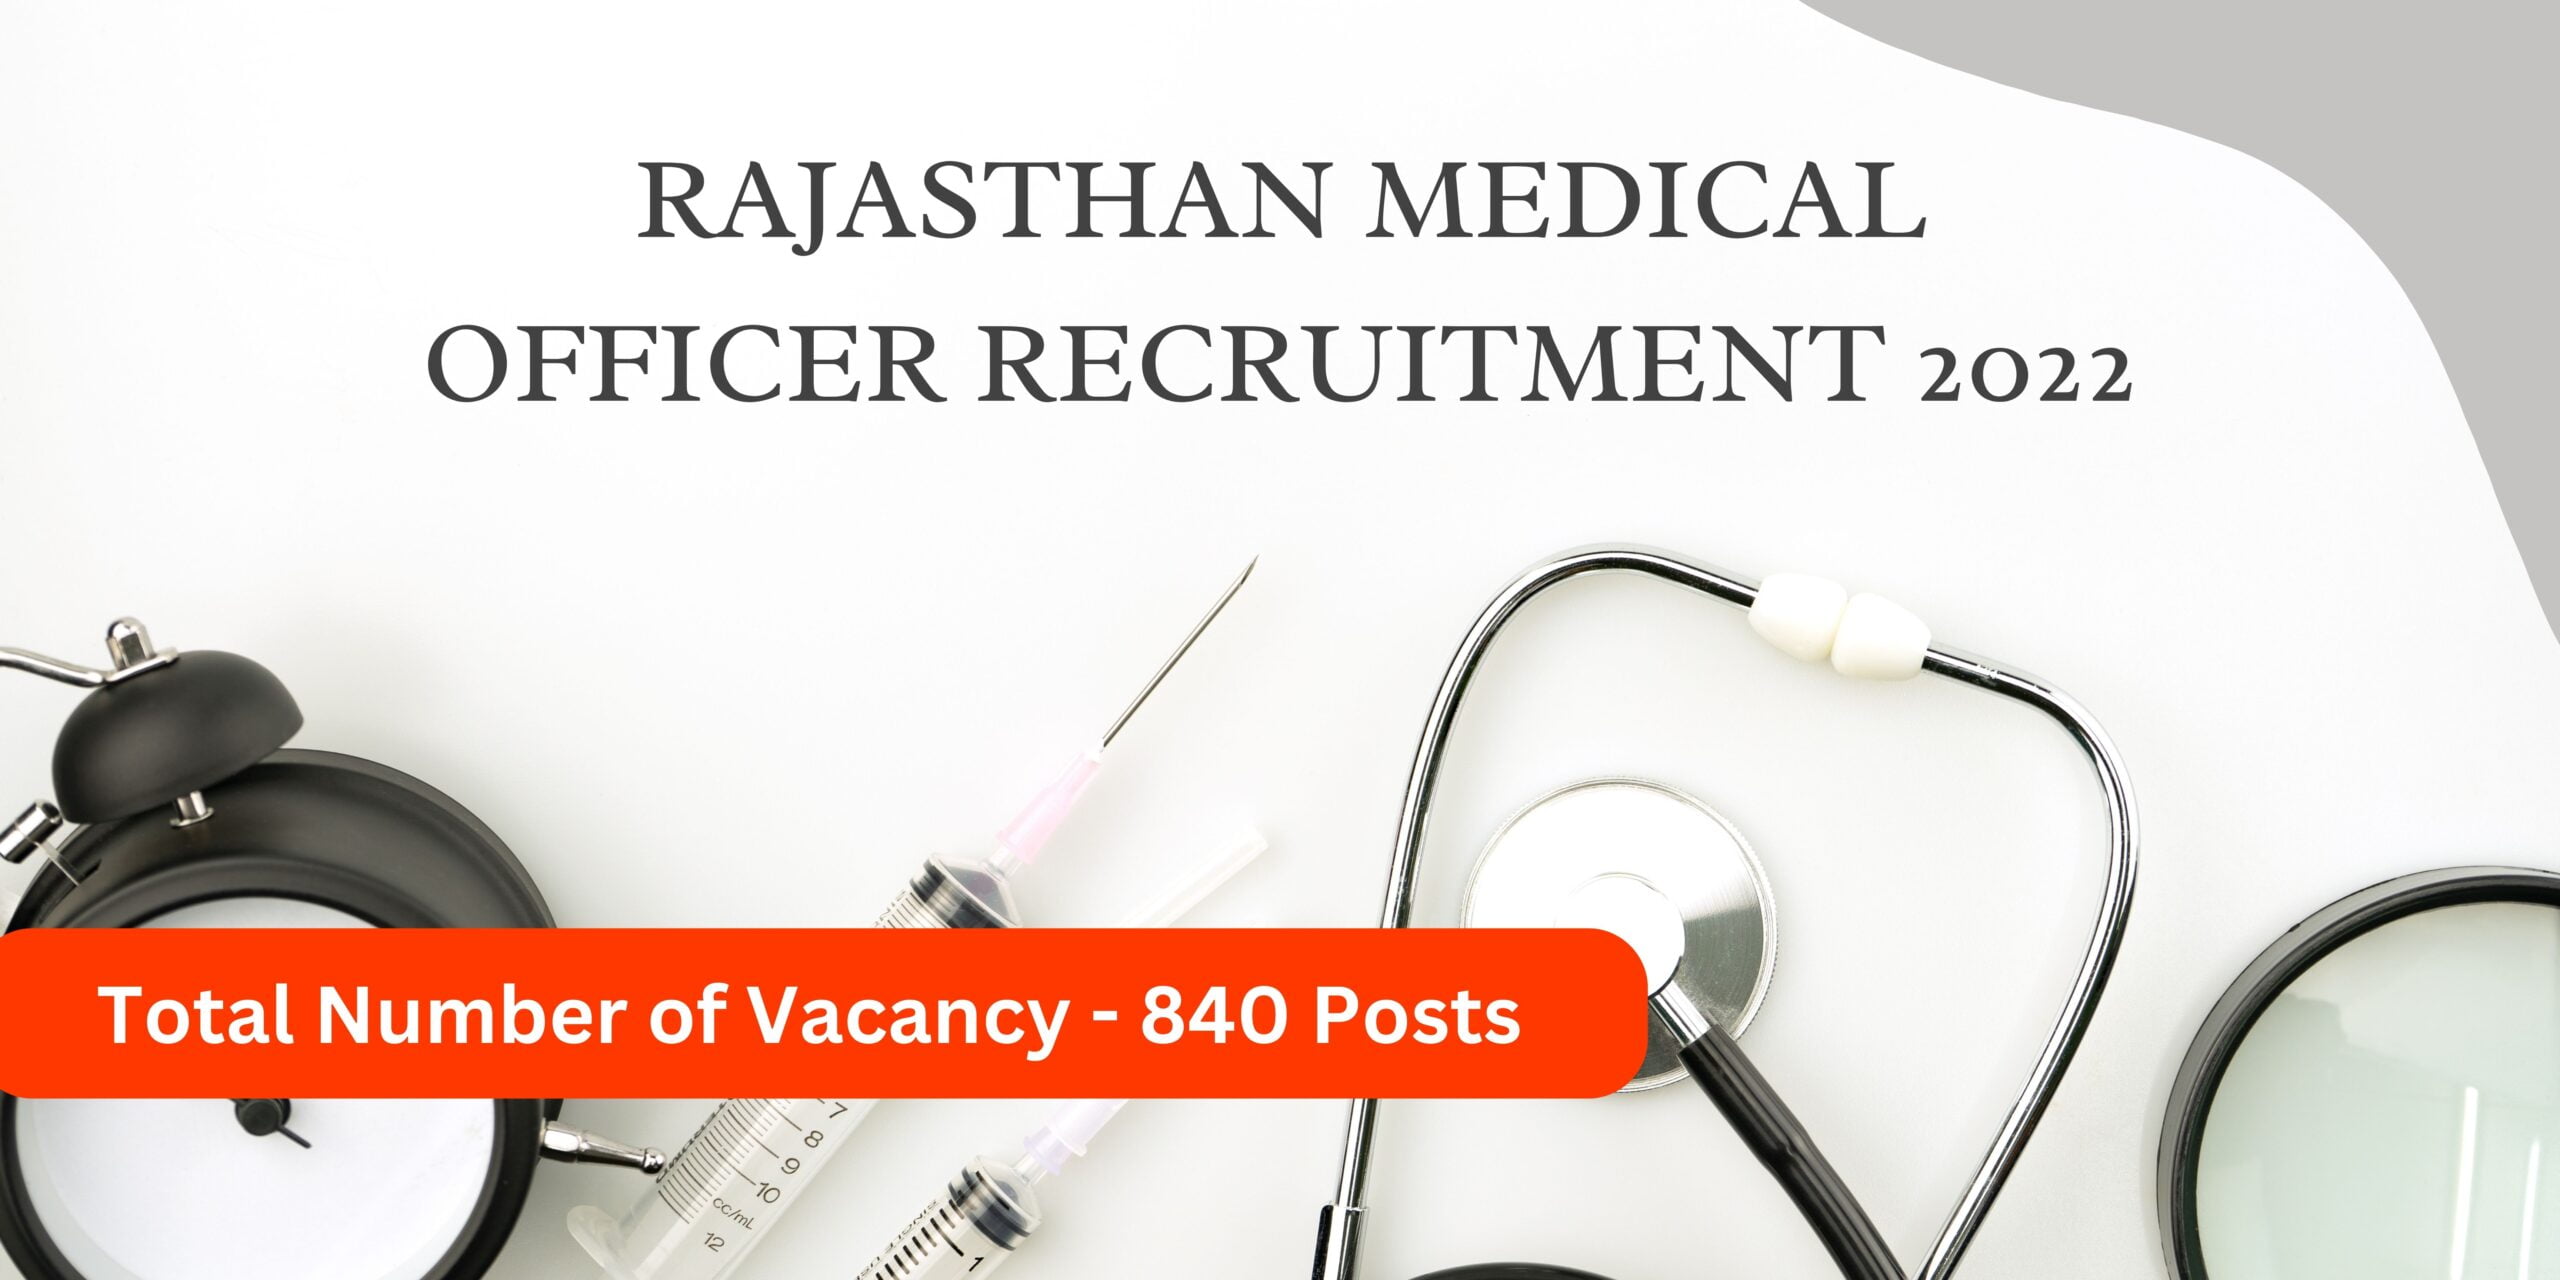 Rajasthan Medical Officer Recruitment 2022